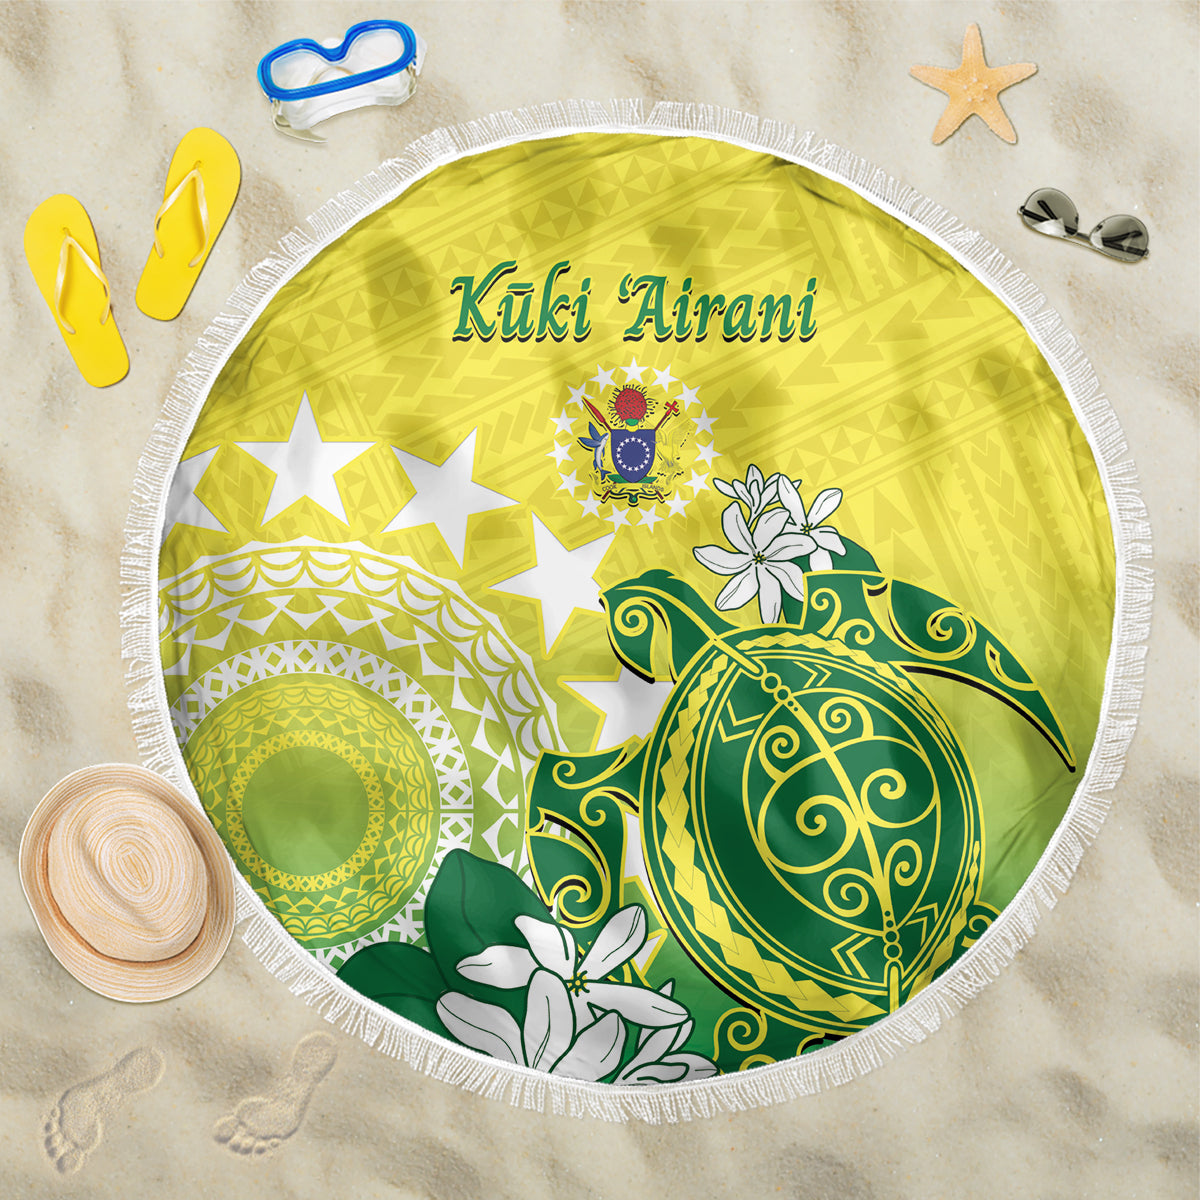 Cook Islands Independence Day Beach Blanket Kuki Airani Tiare Maori Polynesian Pattern - Green